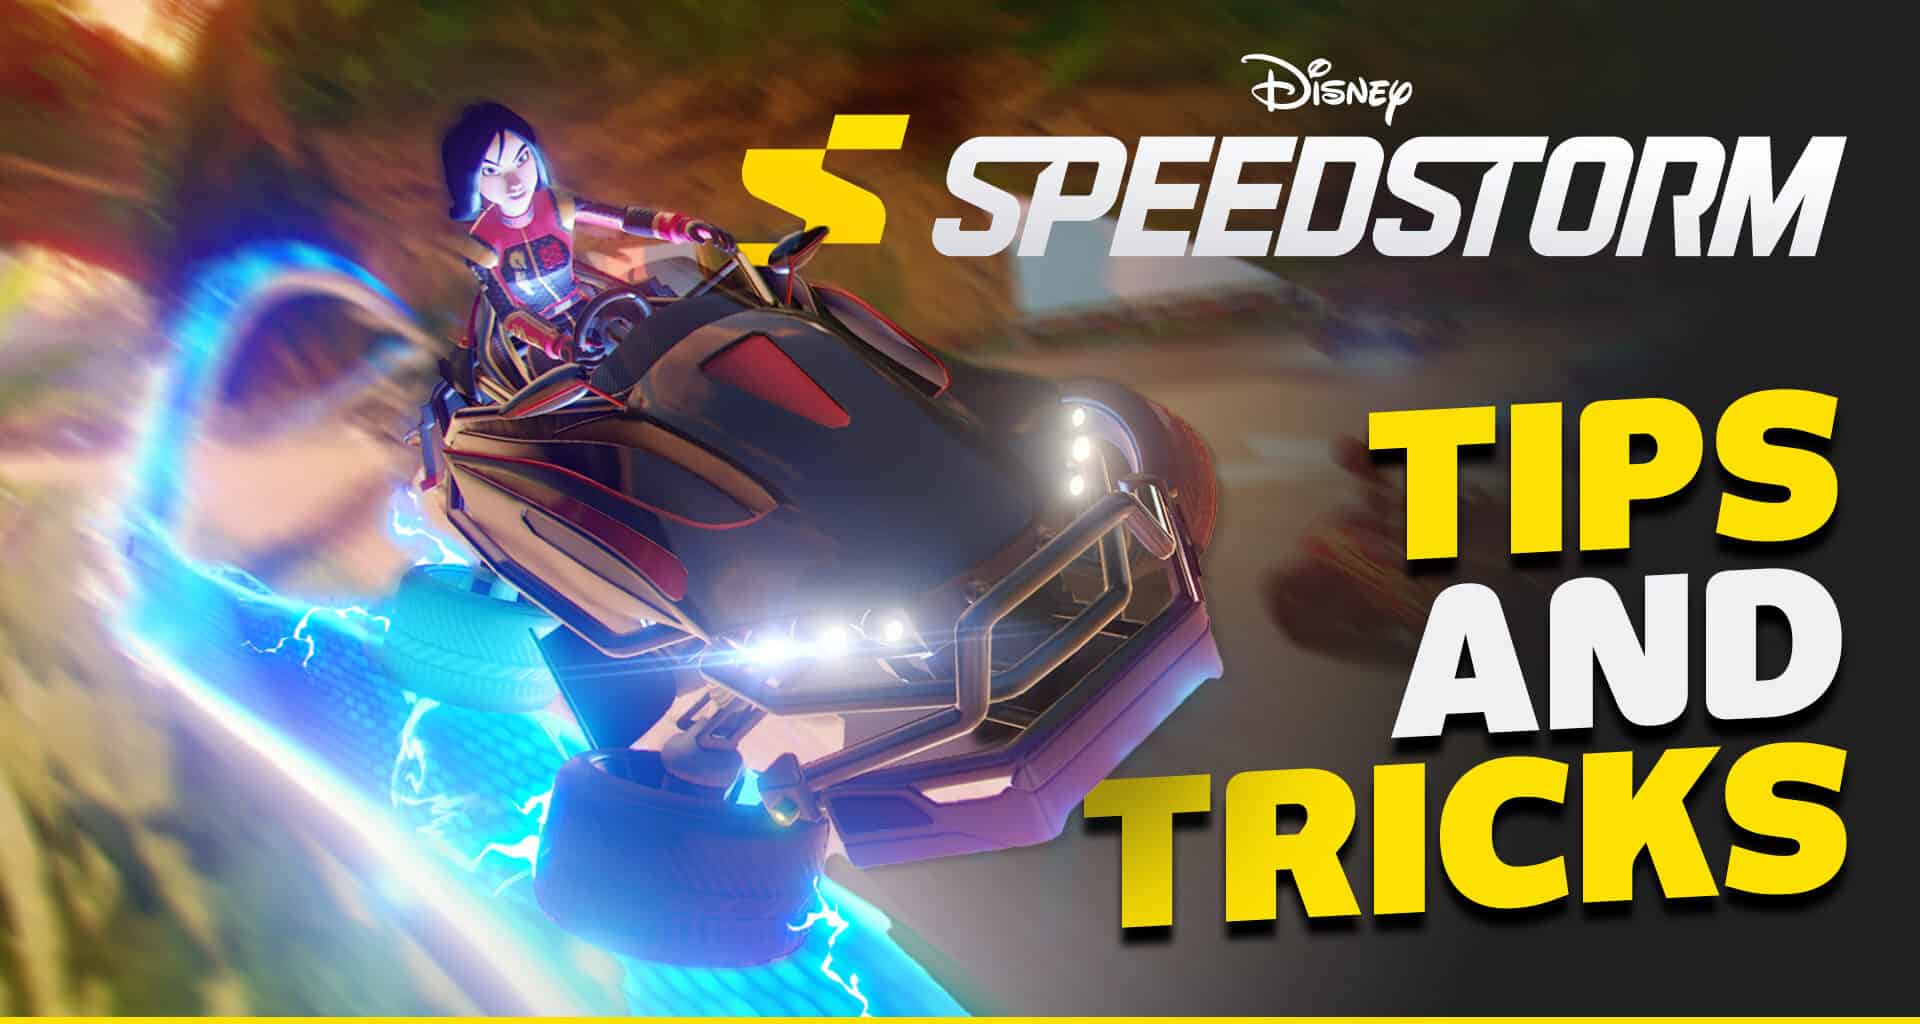 Disney Speedstorm tips and tricks